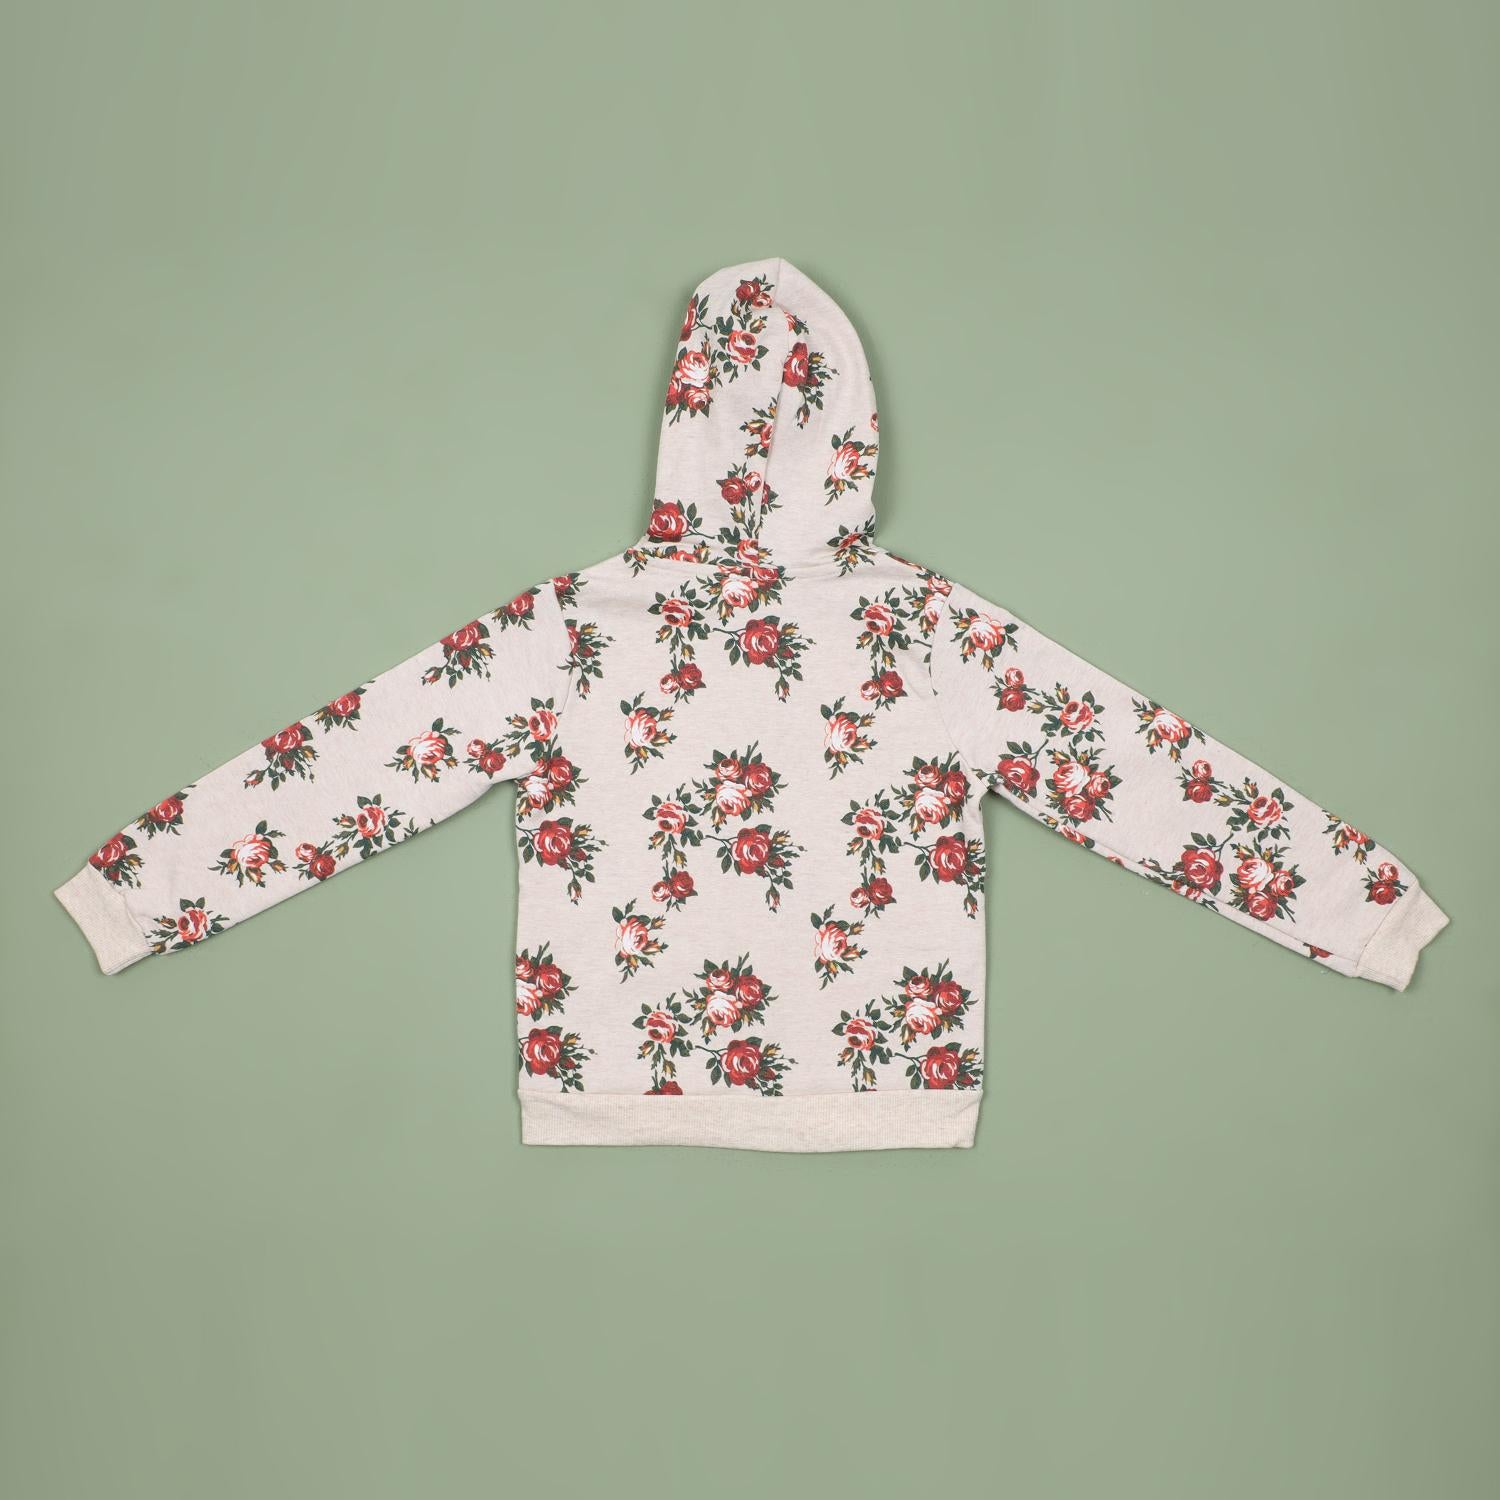 Boys/Girls fleece SweatShirt Jacket - Cream/Multicolour